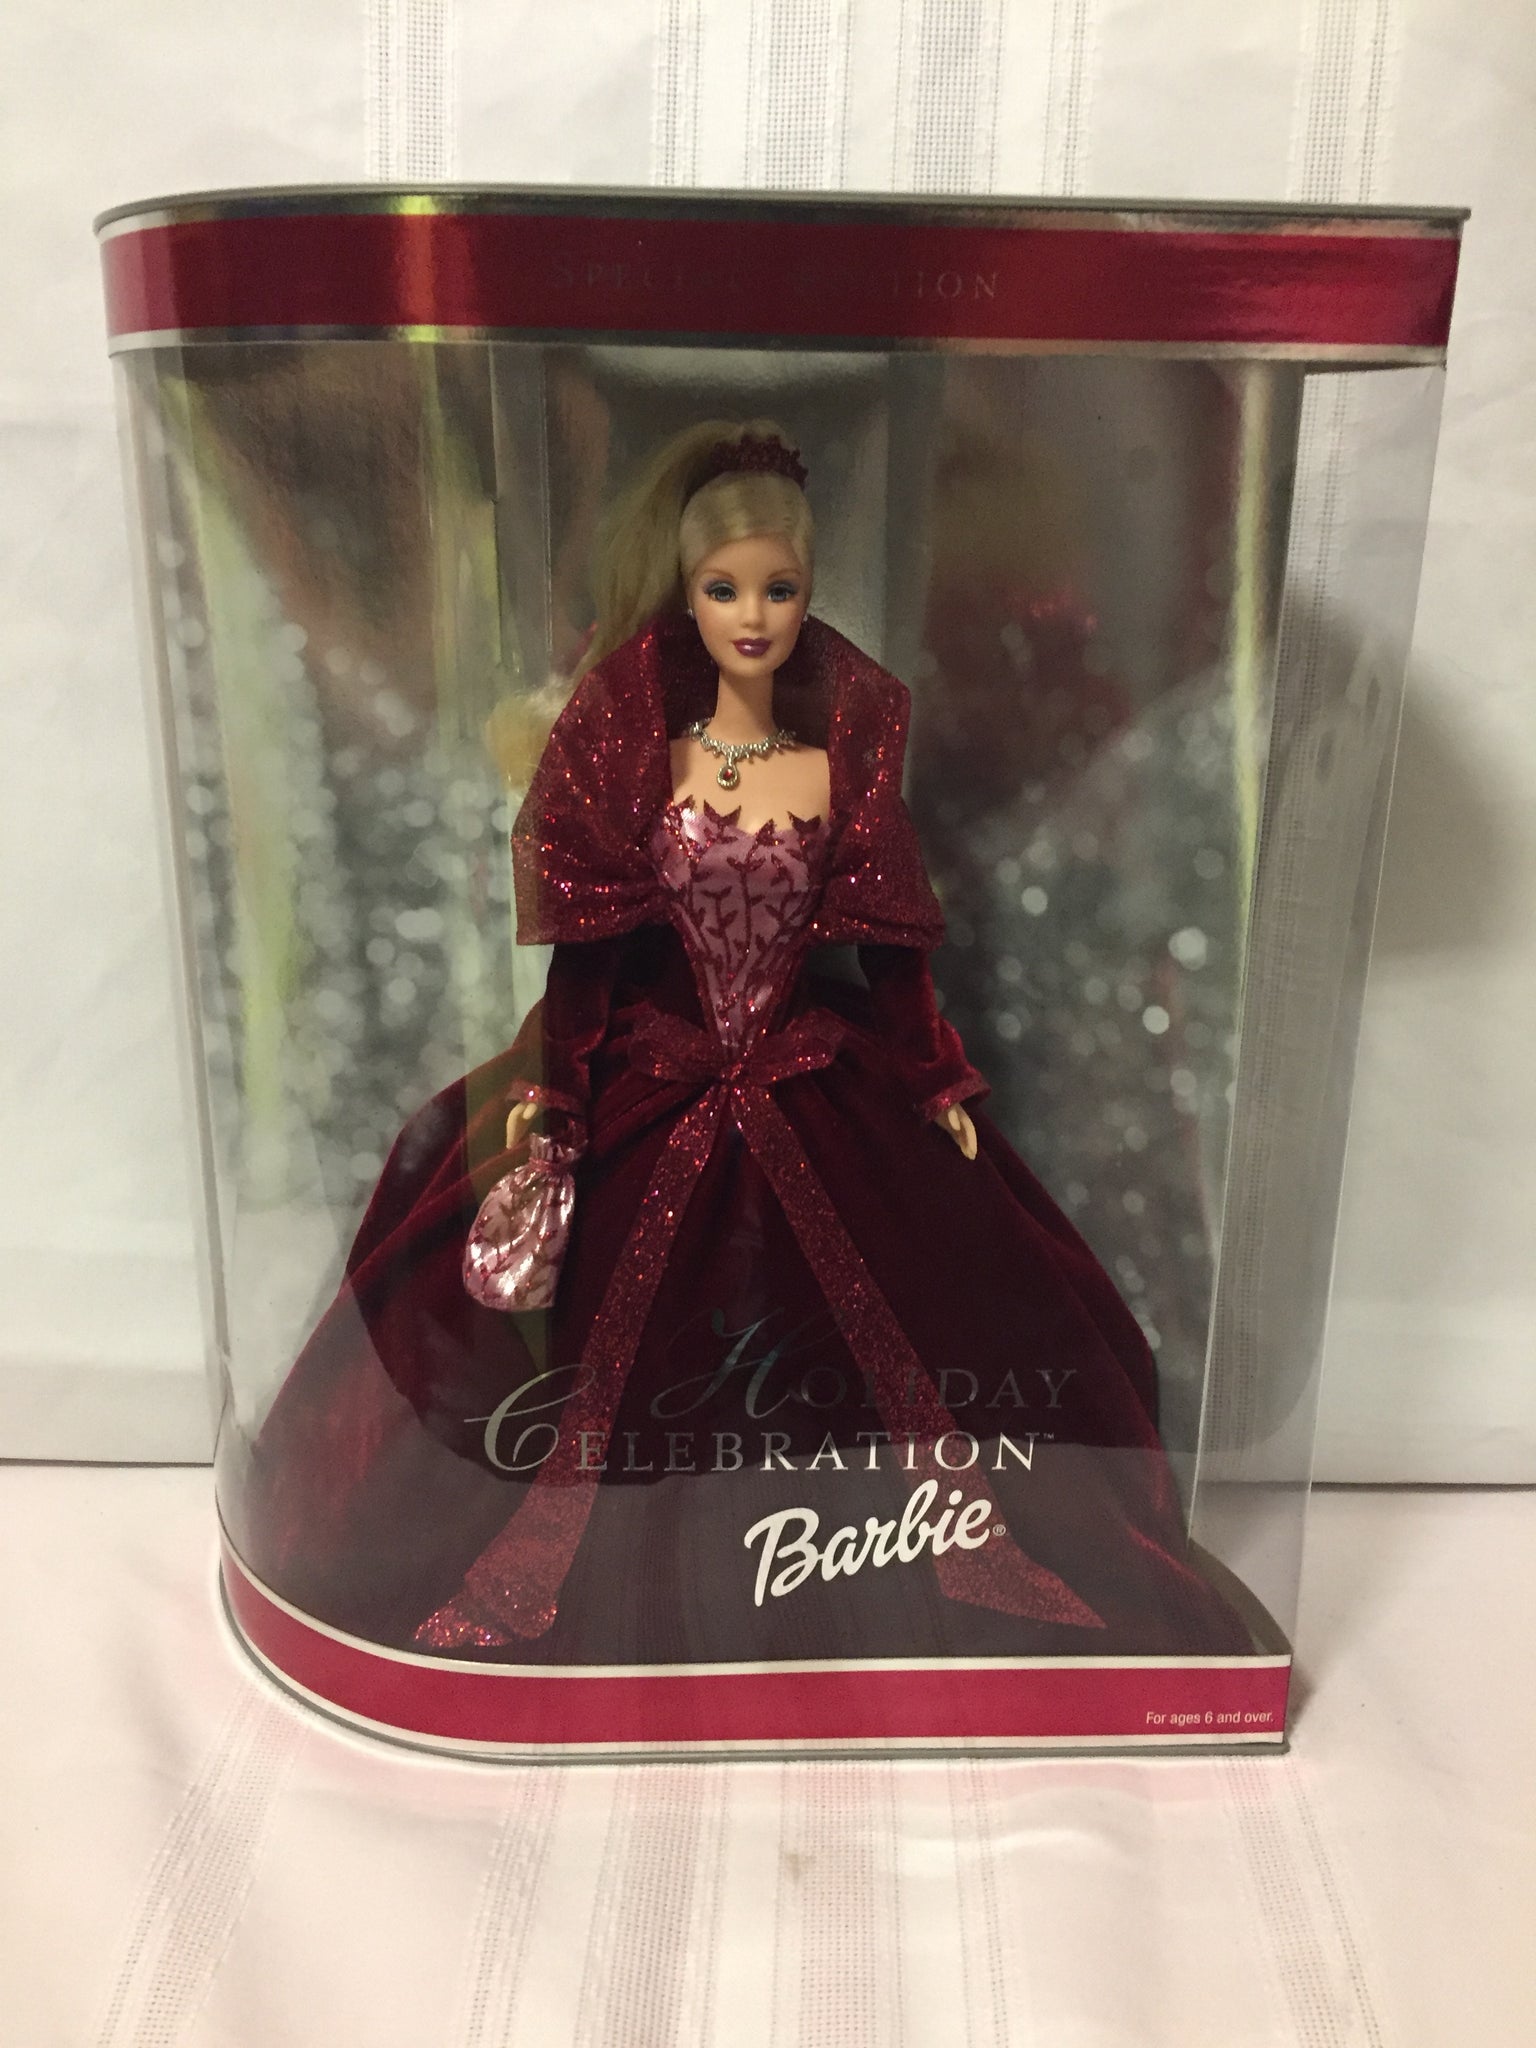 2002 special edition holiday celebration barbie